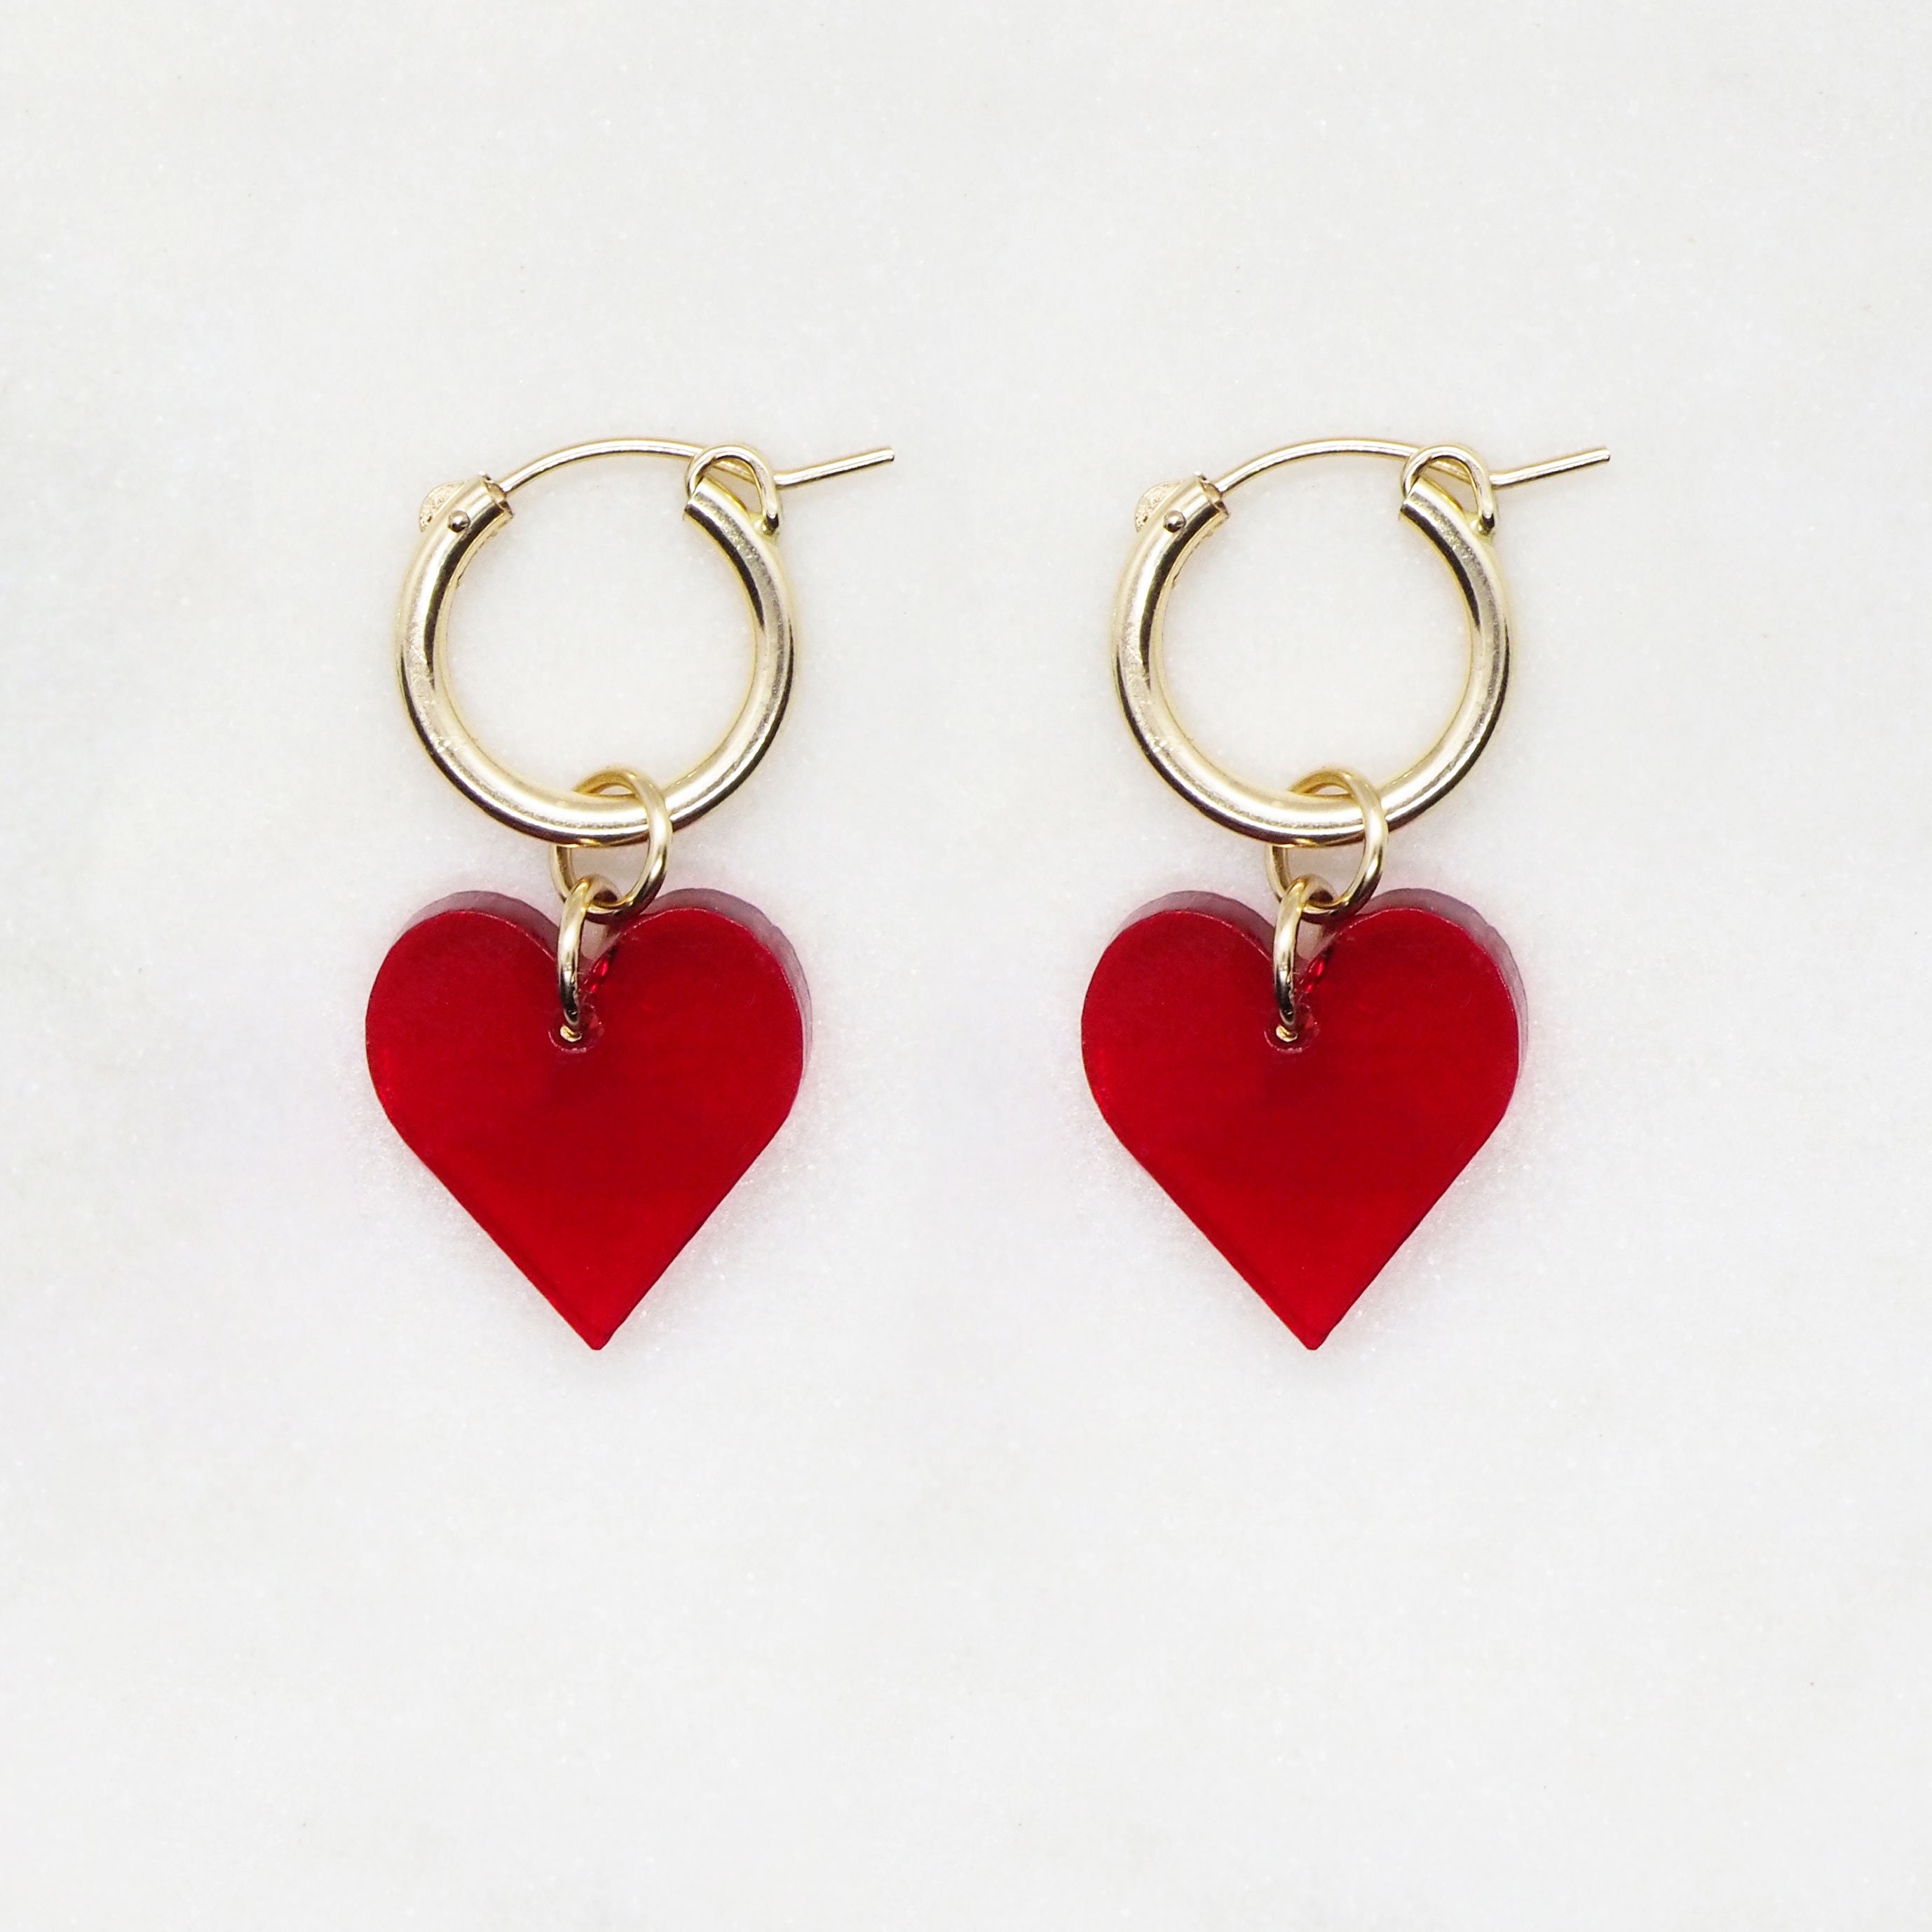 Small Heart Hoop Earrings in 14K Gold-filled Pearl White | Etsy